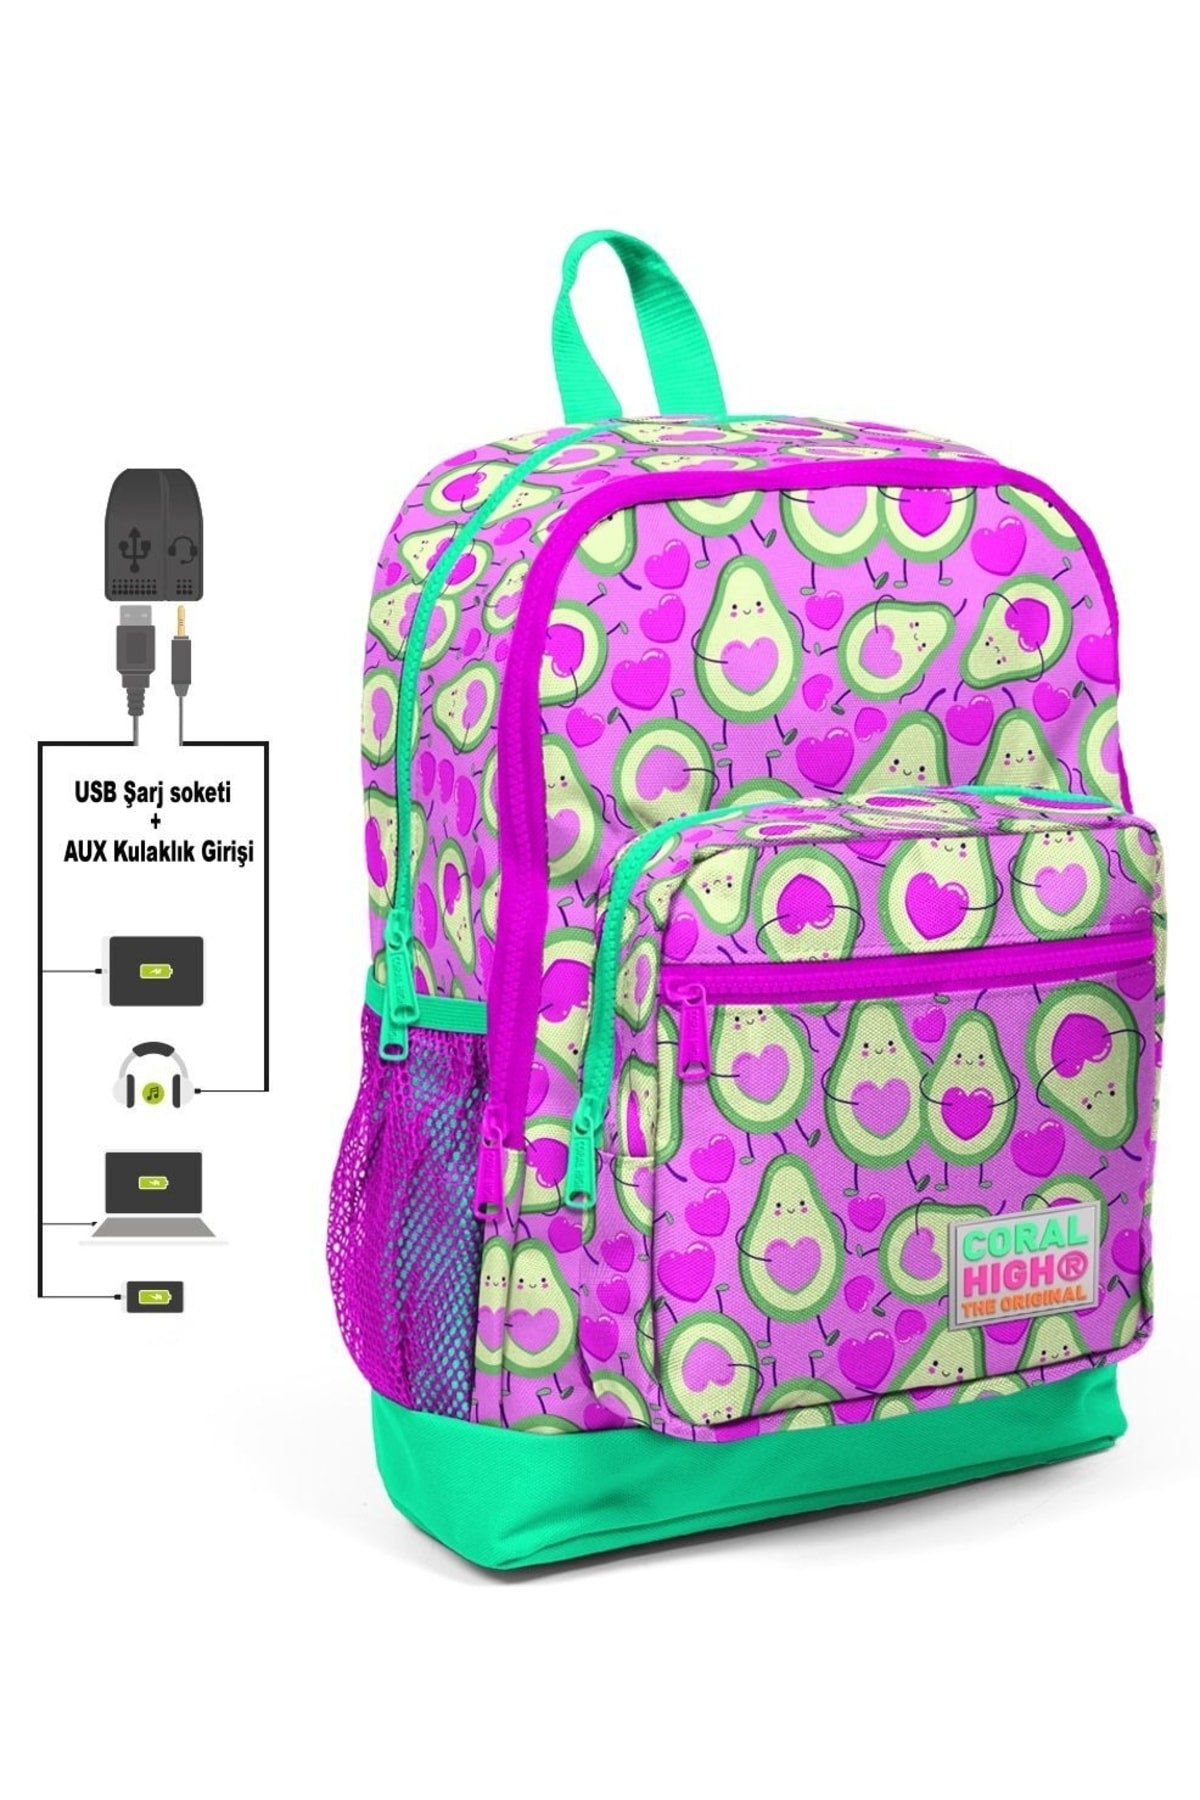 Pink Avacado Printed Girls' Primary School Bag Set - Usb Output